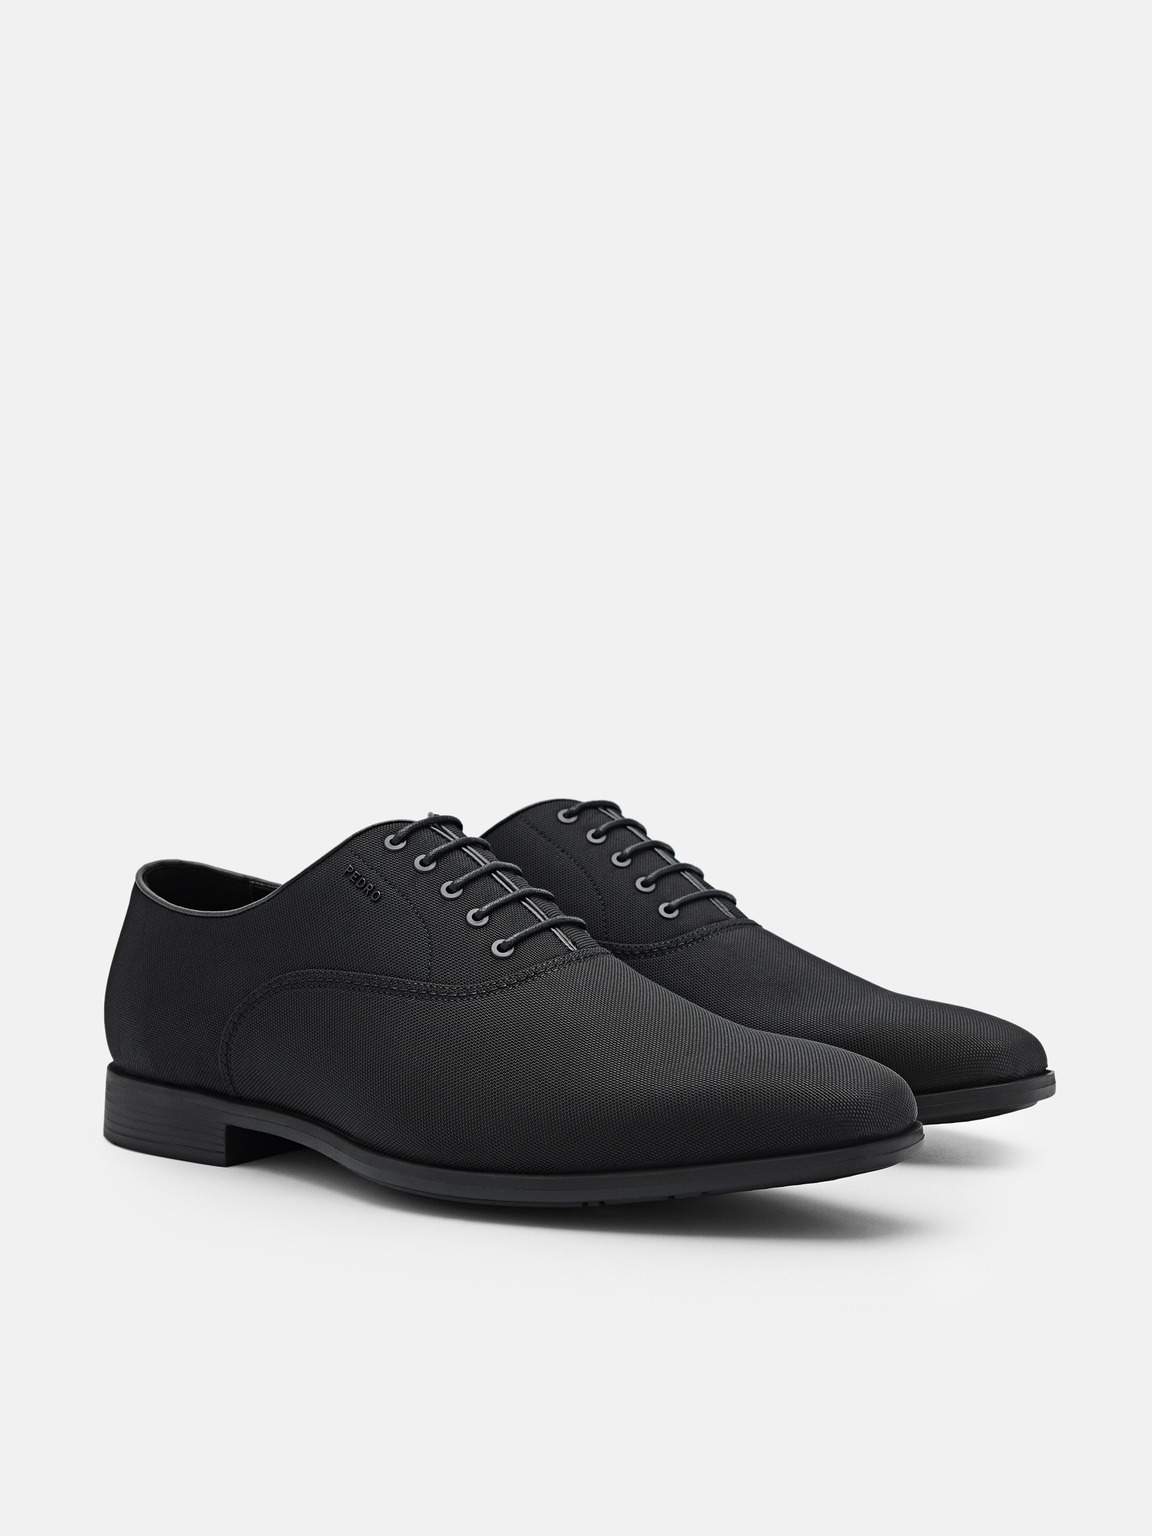 Altitude Lightweight Nylon Oxford Shoes, Black